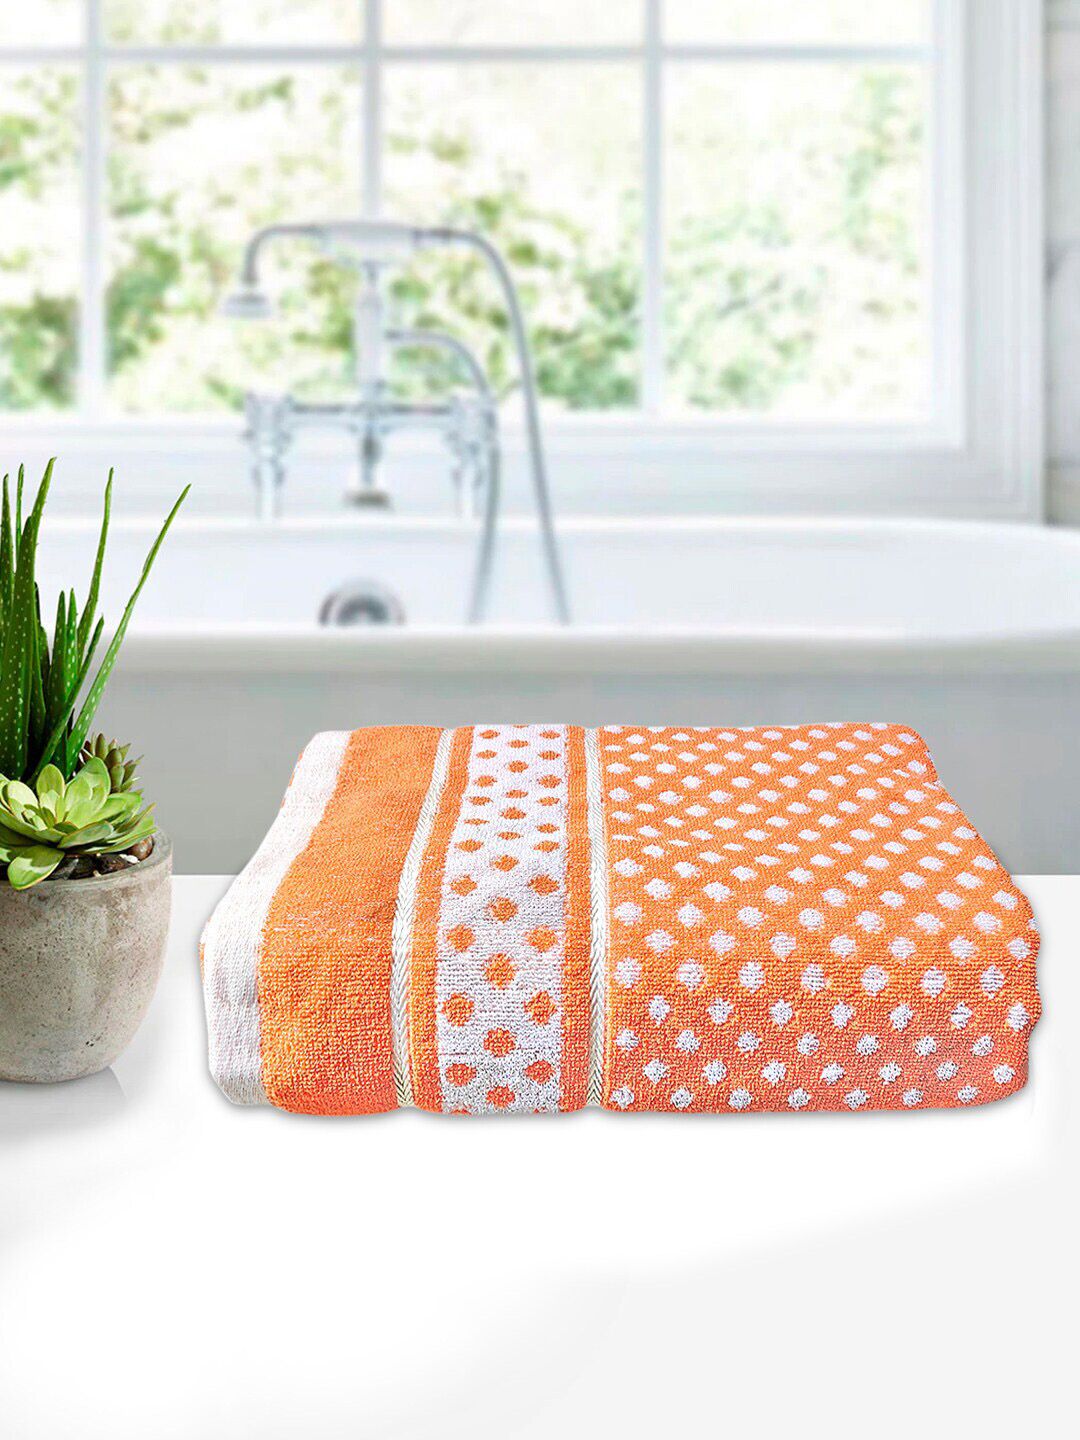 Kuber Industries Unisex Orange Printed 400 GSM Cotton Bath Towels Price in India